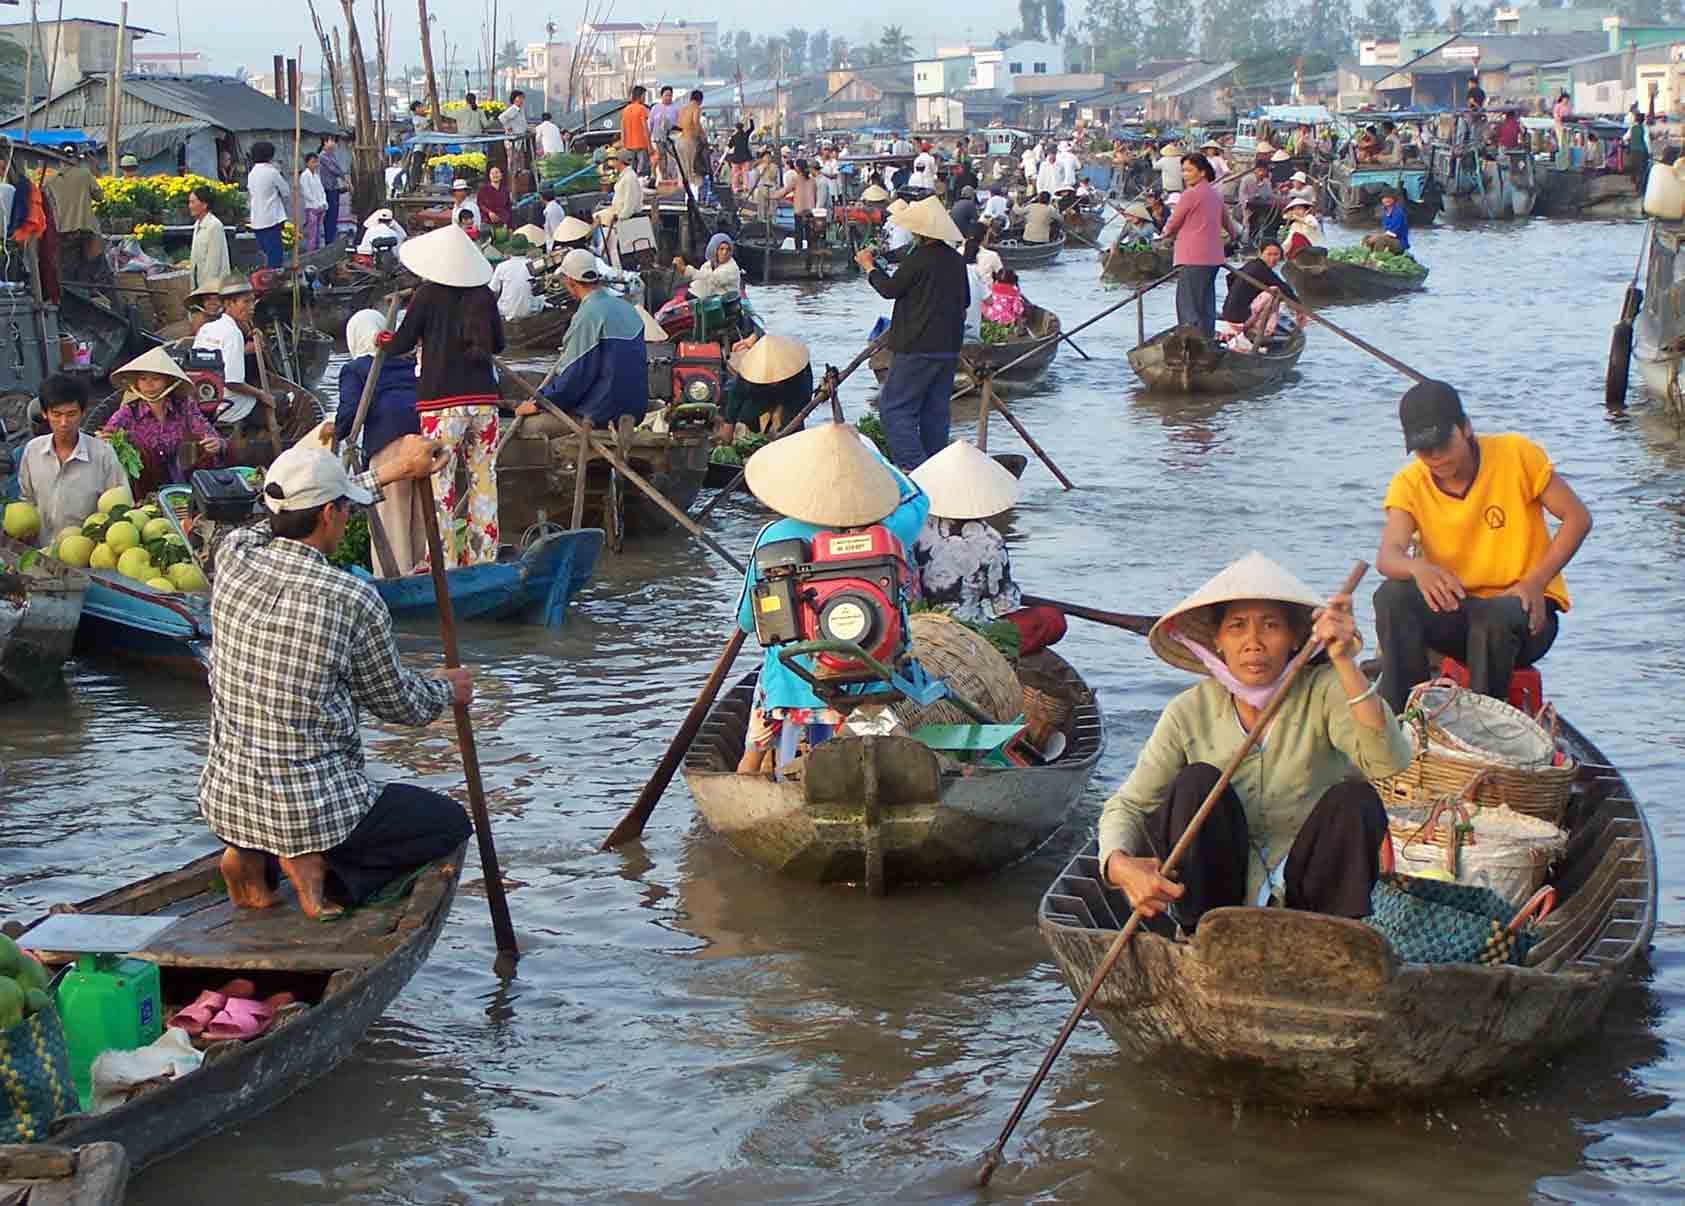 Mekong Delta 1 day